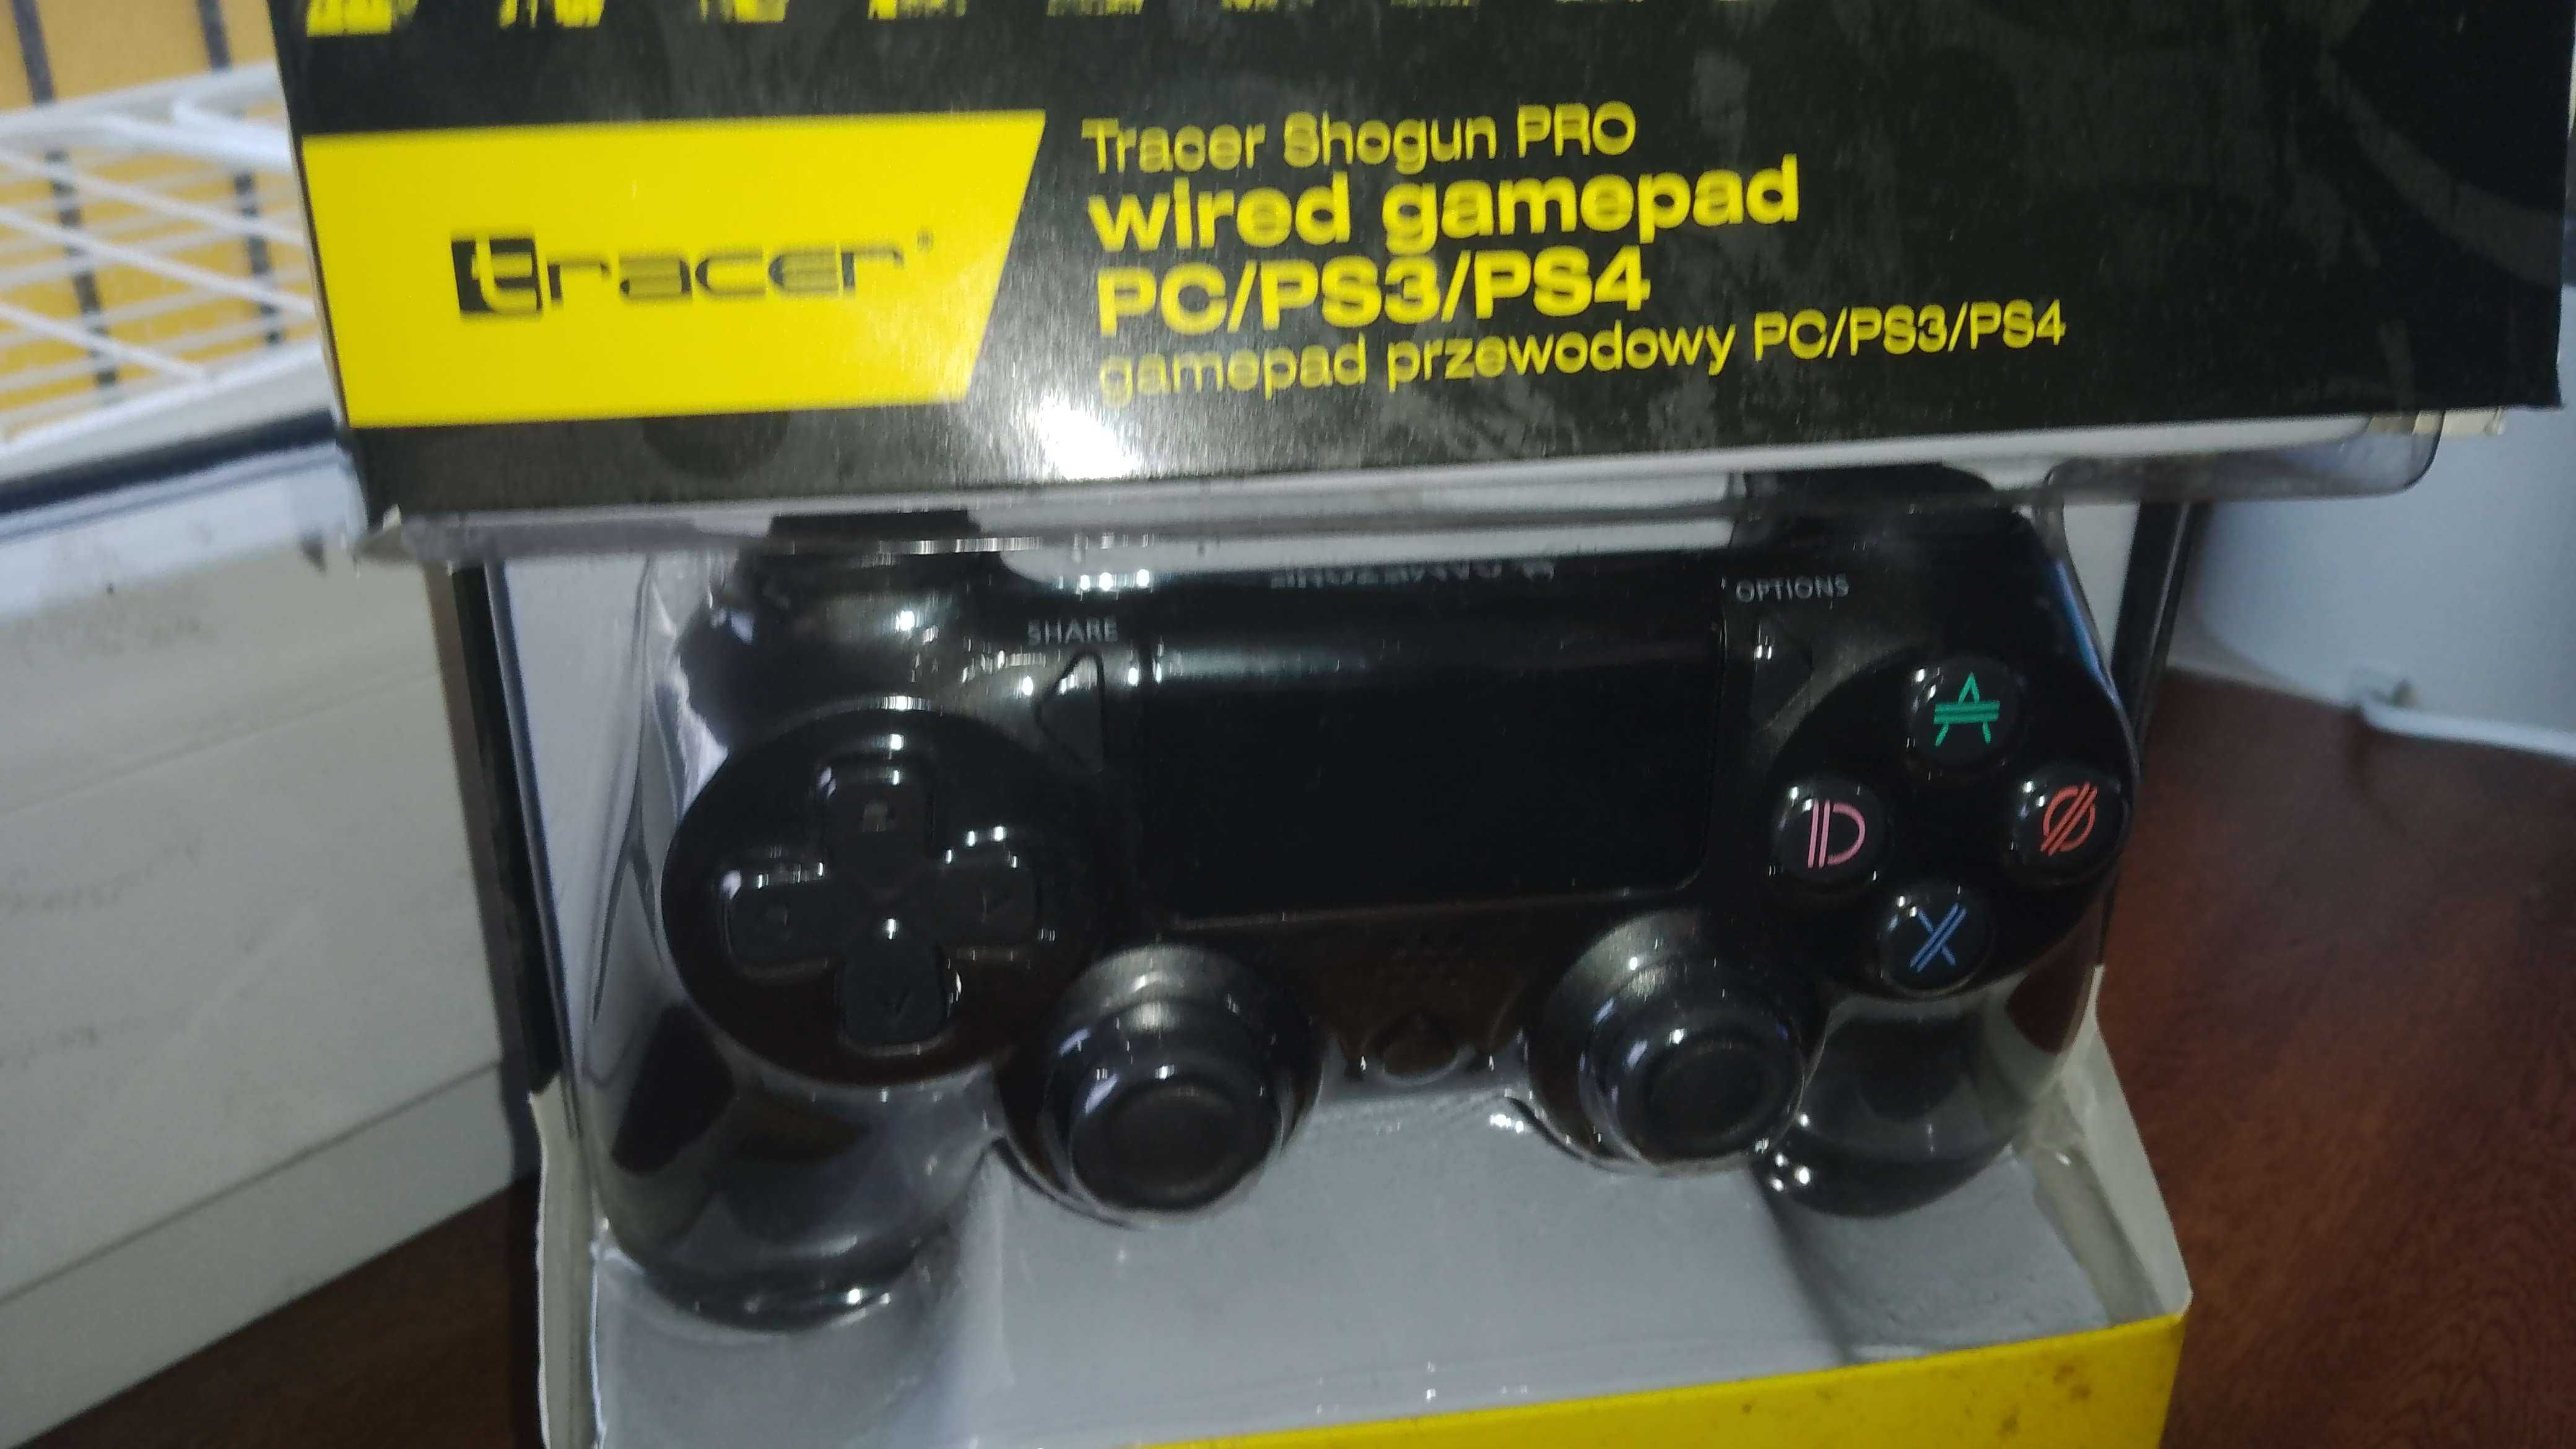 Gamepad Tracer Shogun Pro ps4/ps3/pc